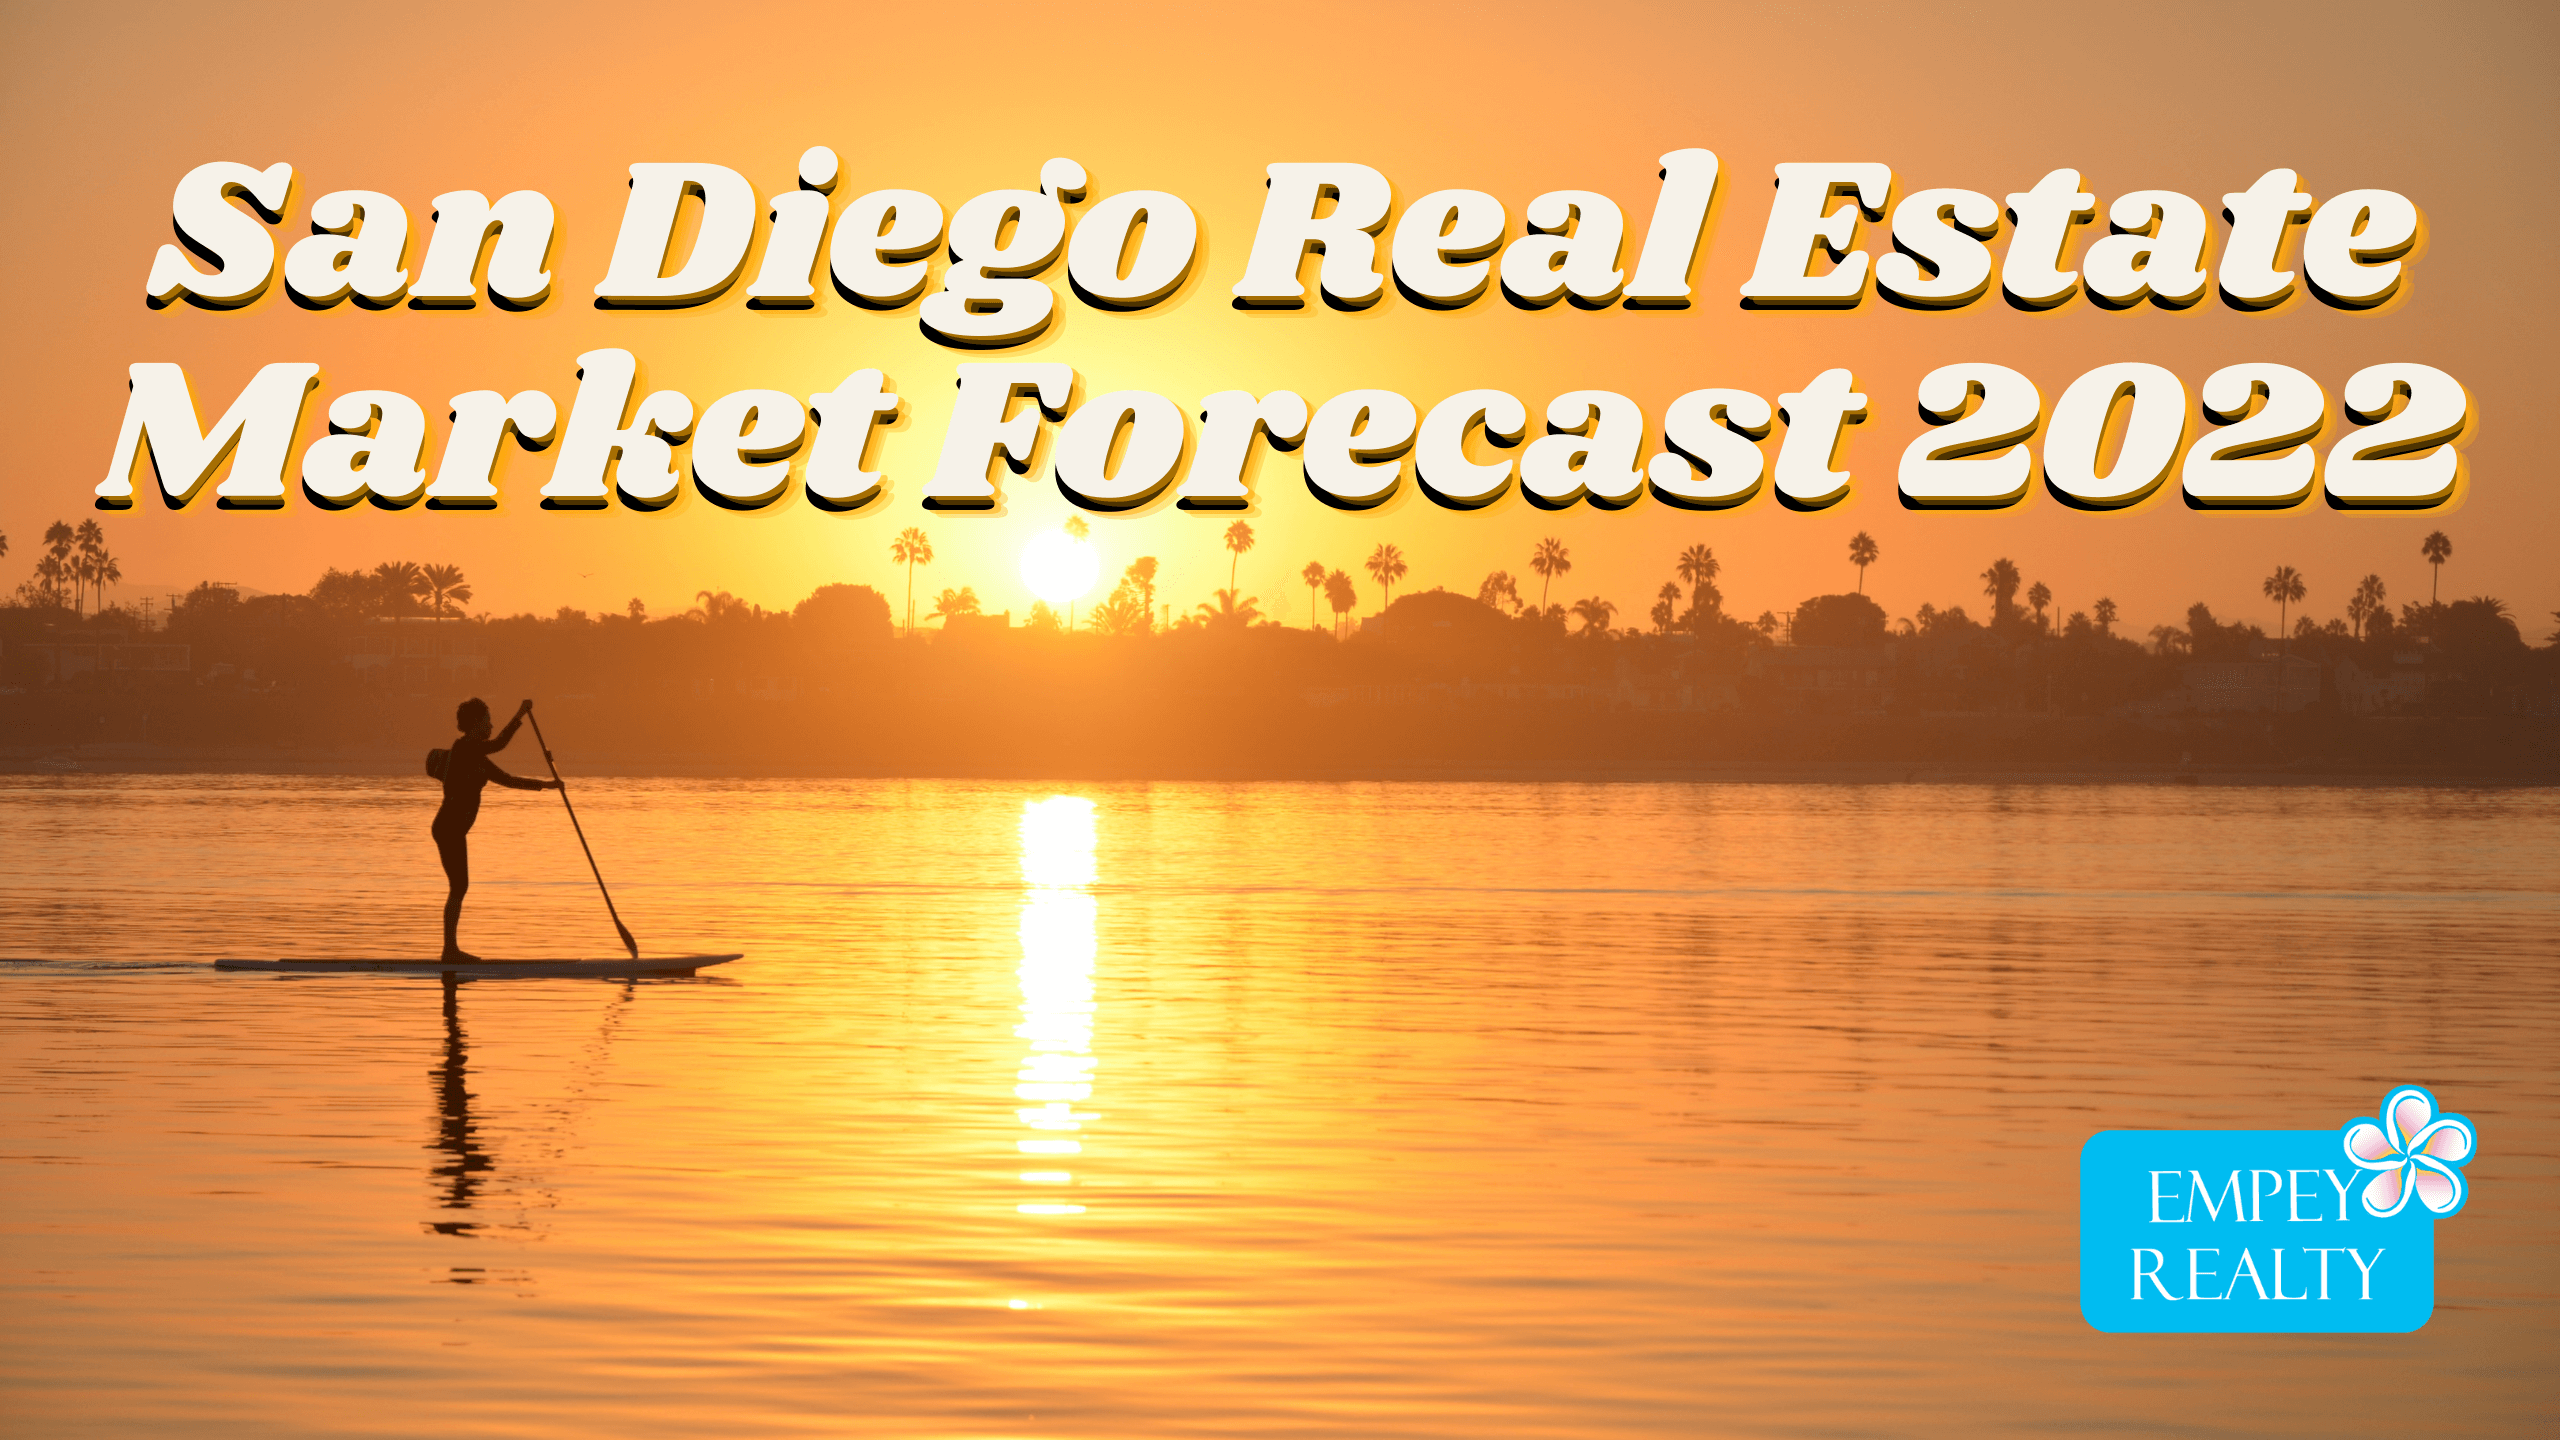 San Diego Real Estate Market Forecast 2022